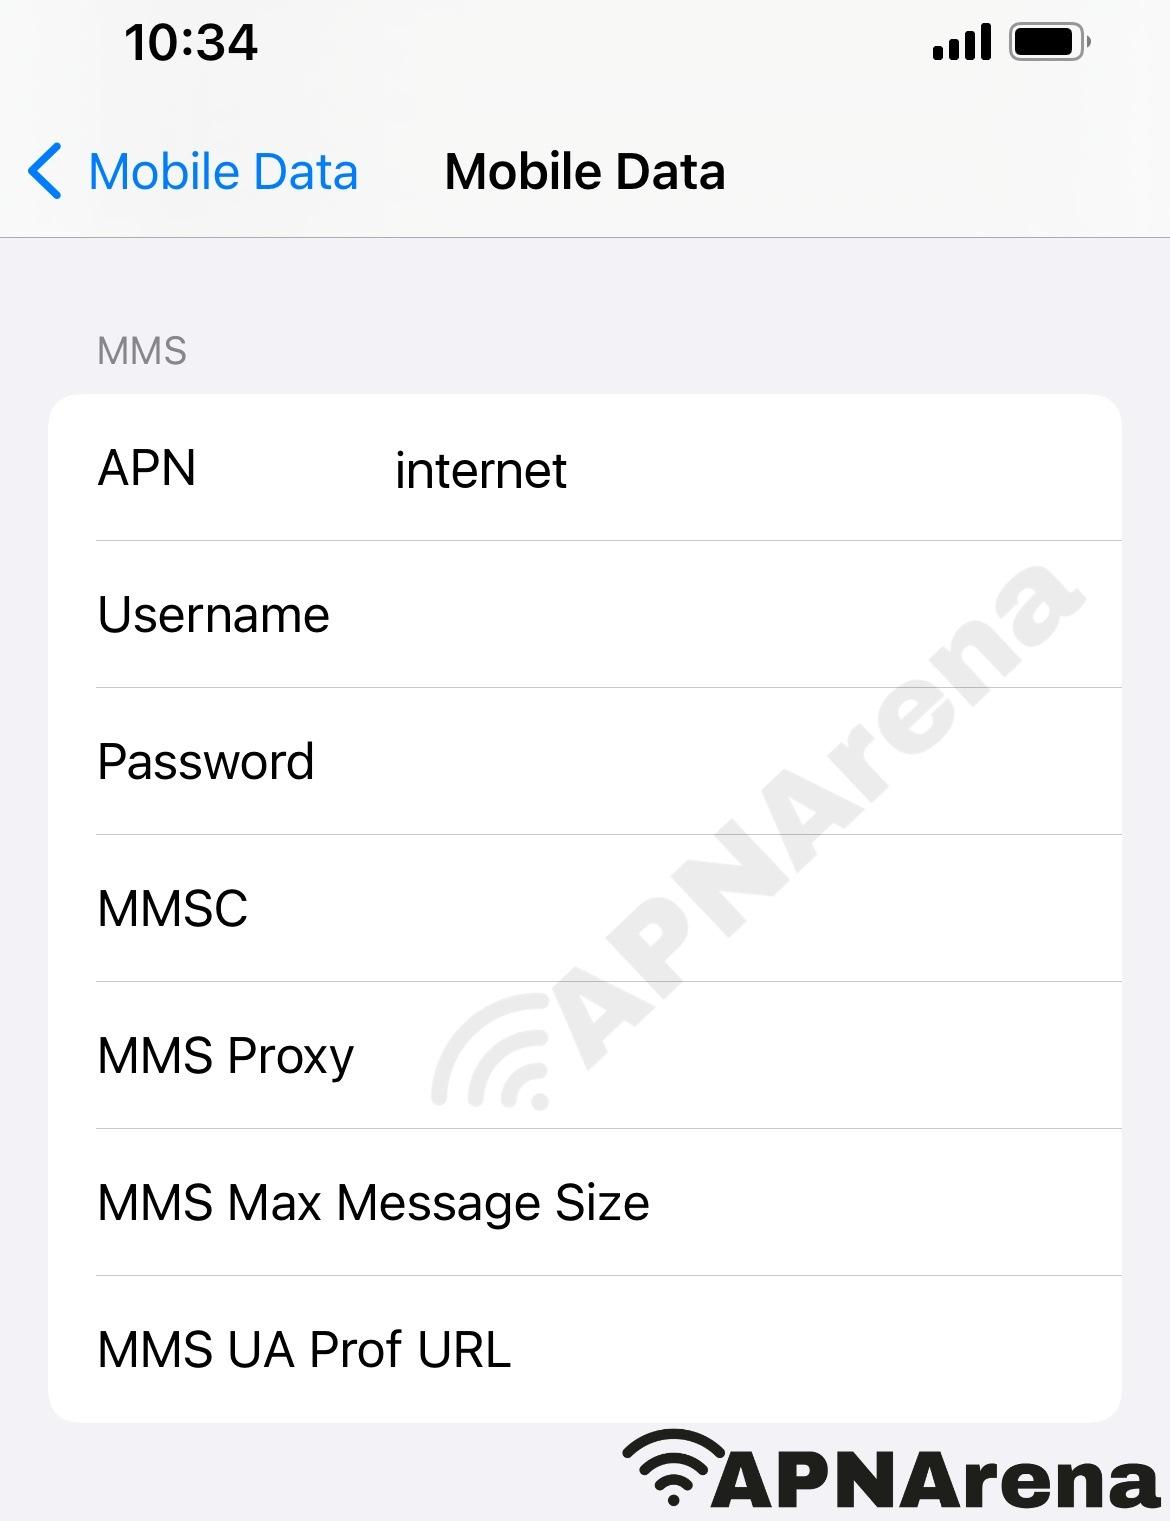 RedBull Mobile MMS Settings for iPhone